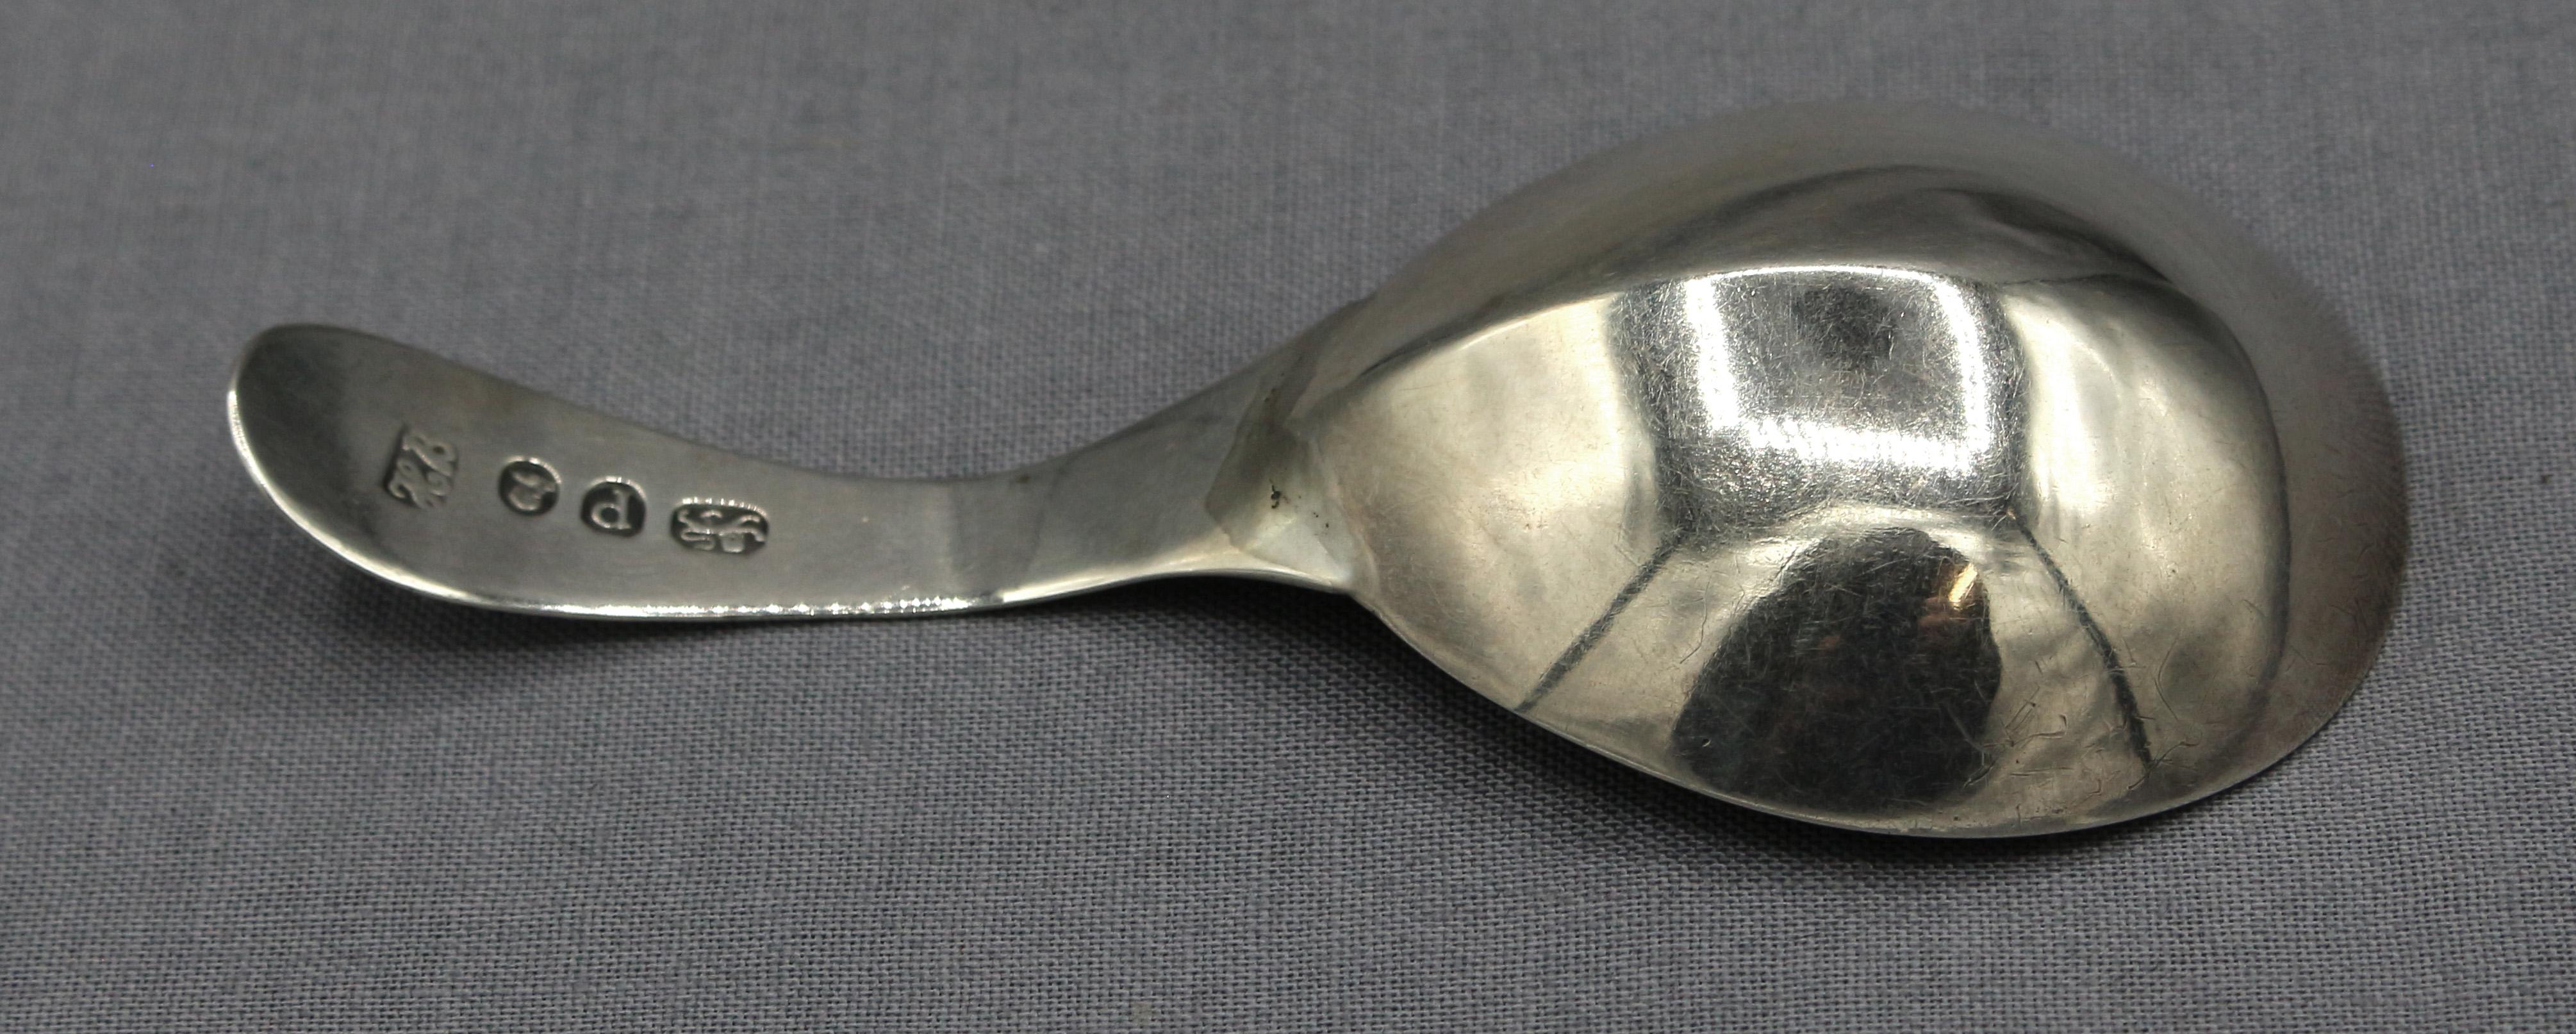 Federal Sterling Silver Tea Caddy Spoon by Hester Bateman, London, 1790